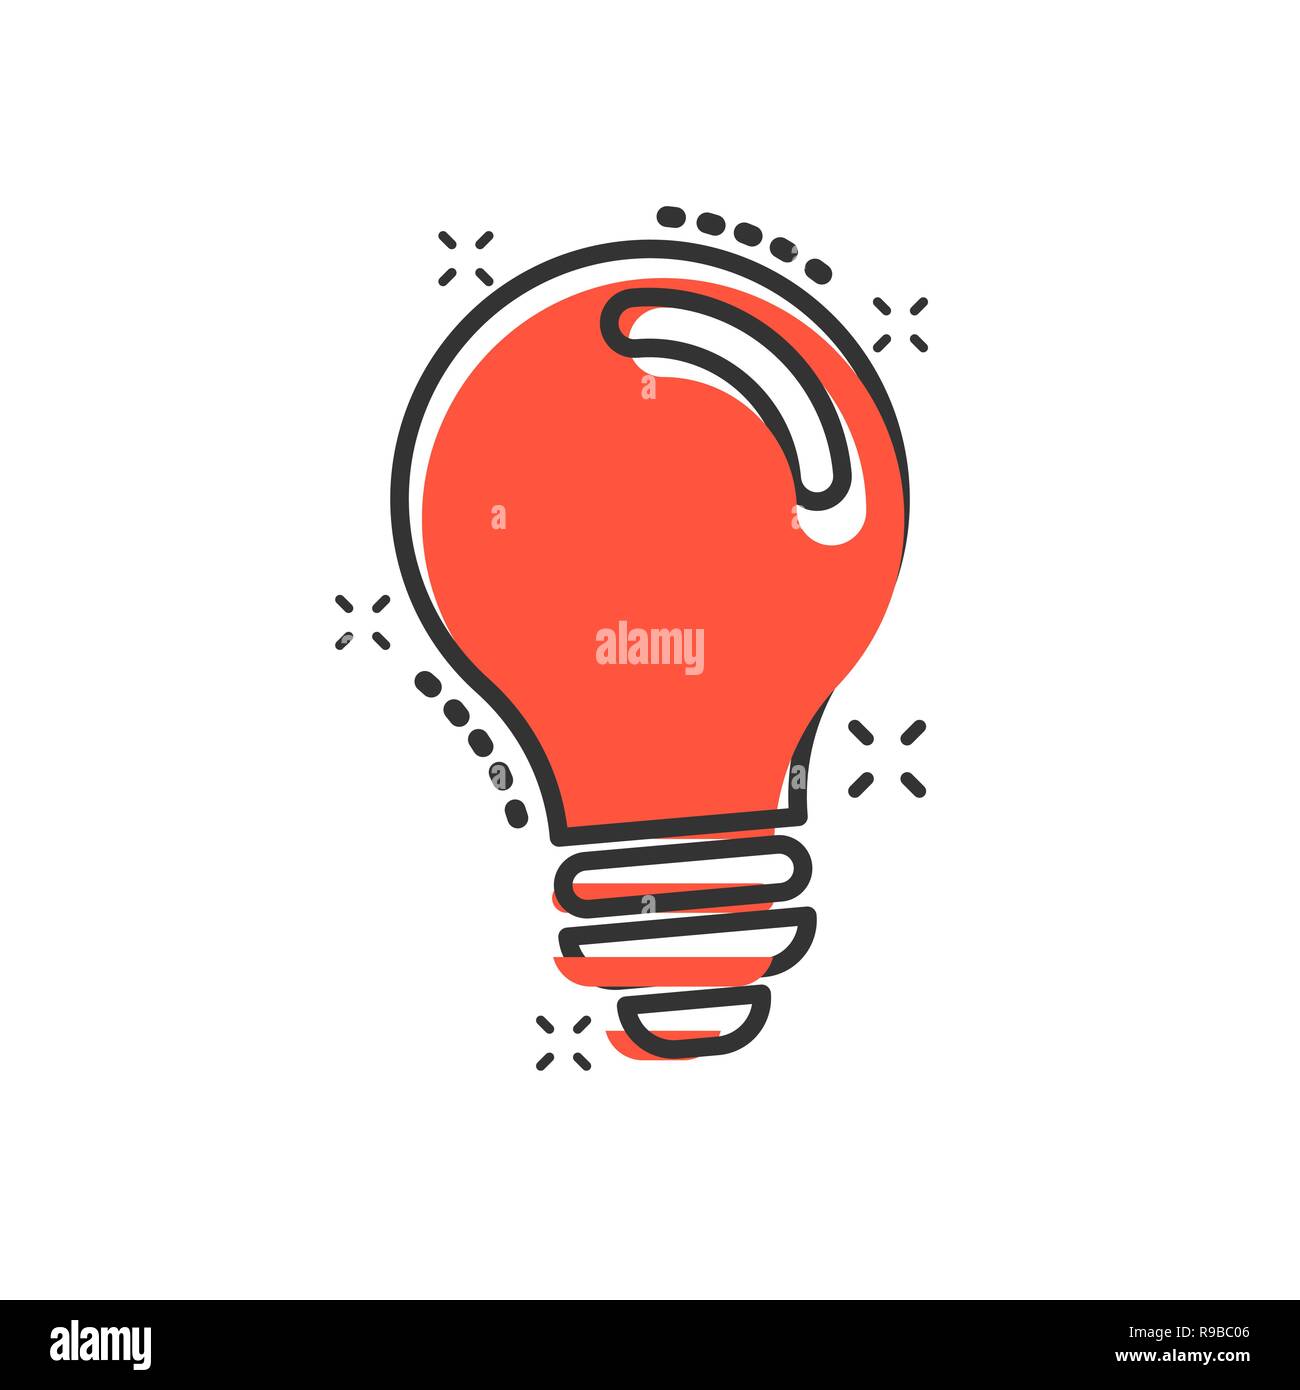 Light bulb icon in comic style. Lightbulb vector cartoon illustration pictogram. Lamp idea business concept splash effect. Stock Vector